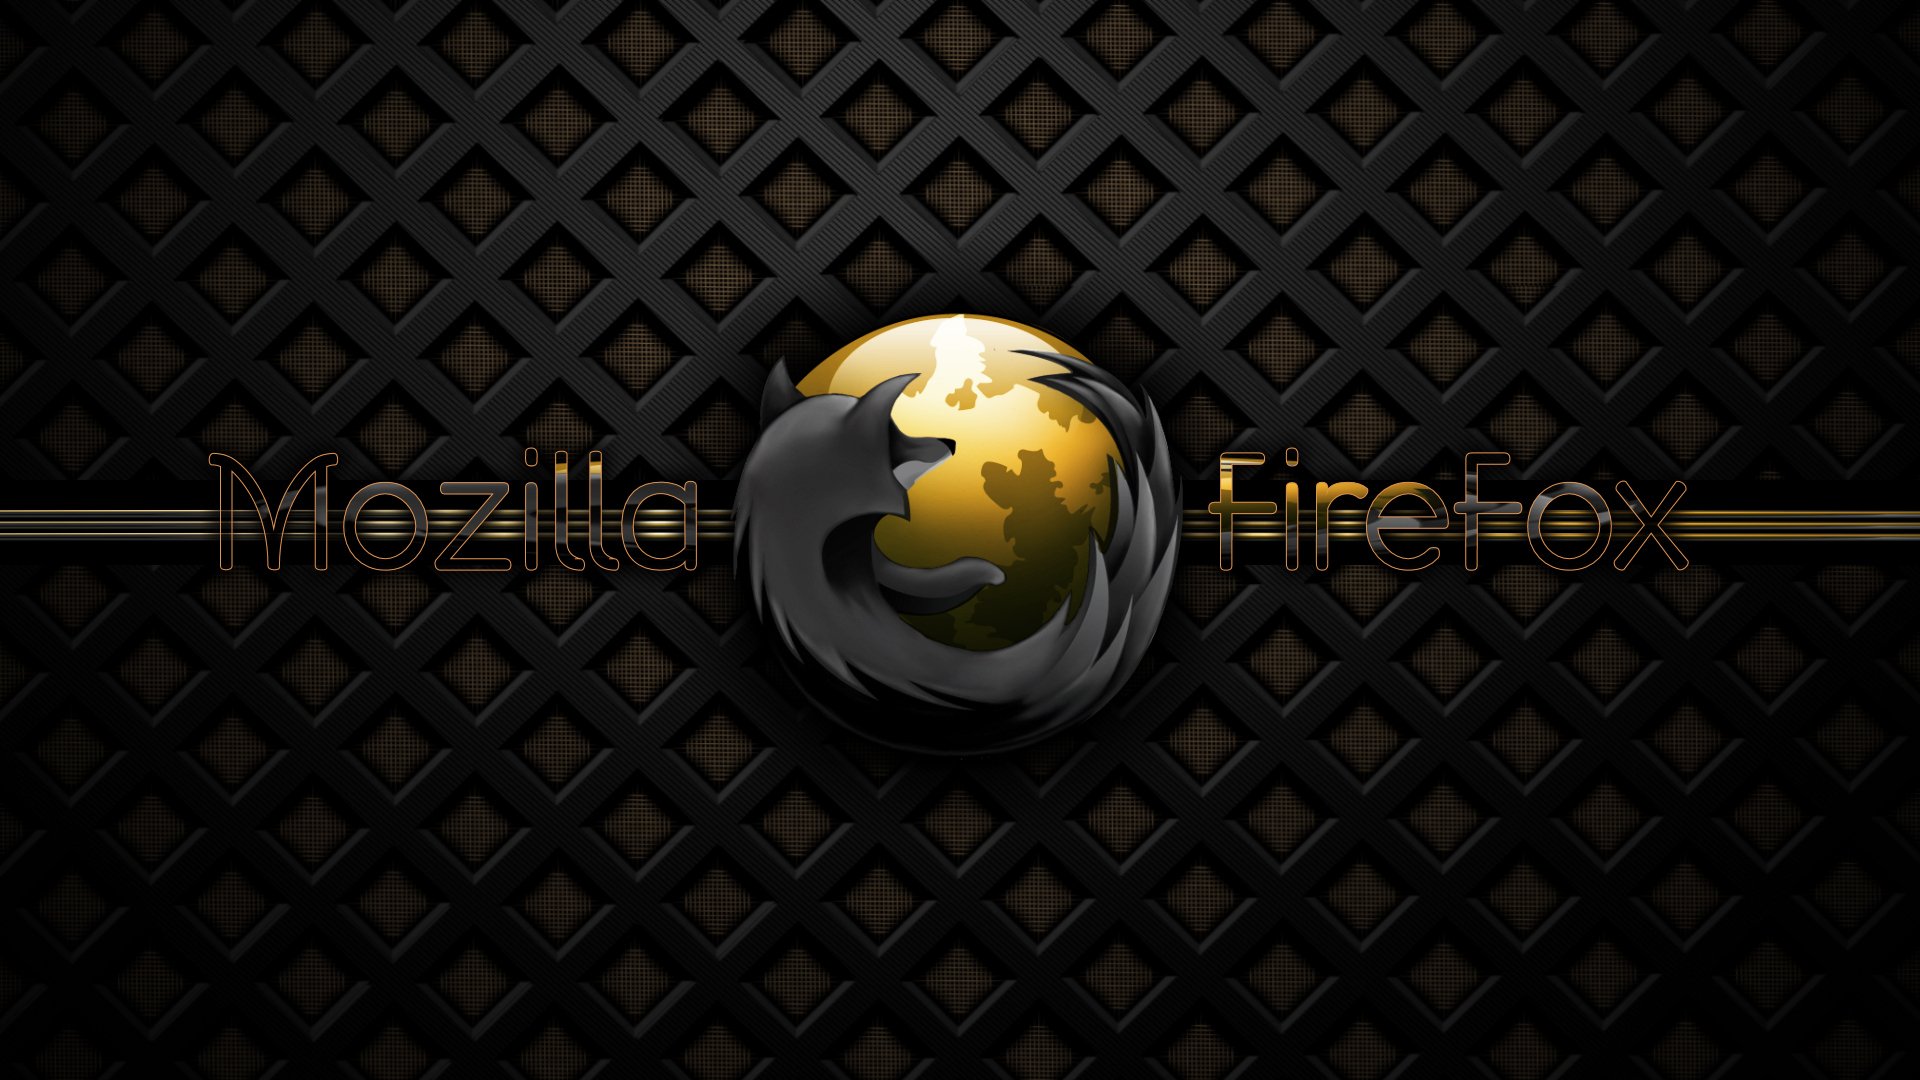 mozilla firefox theme creator